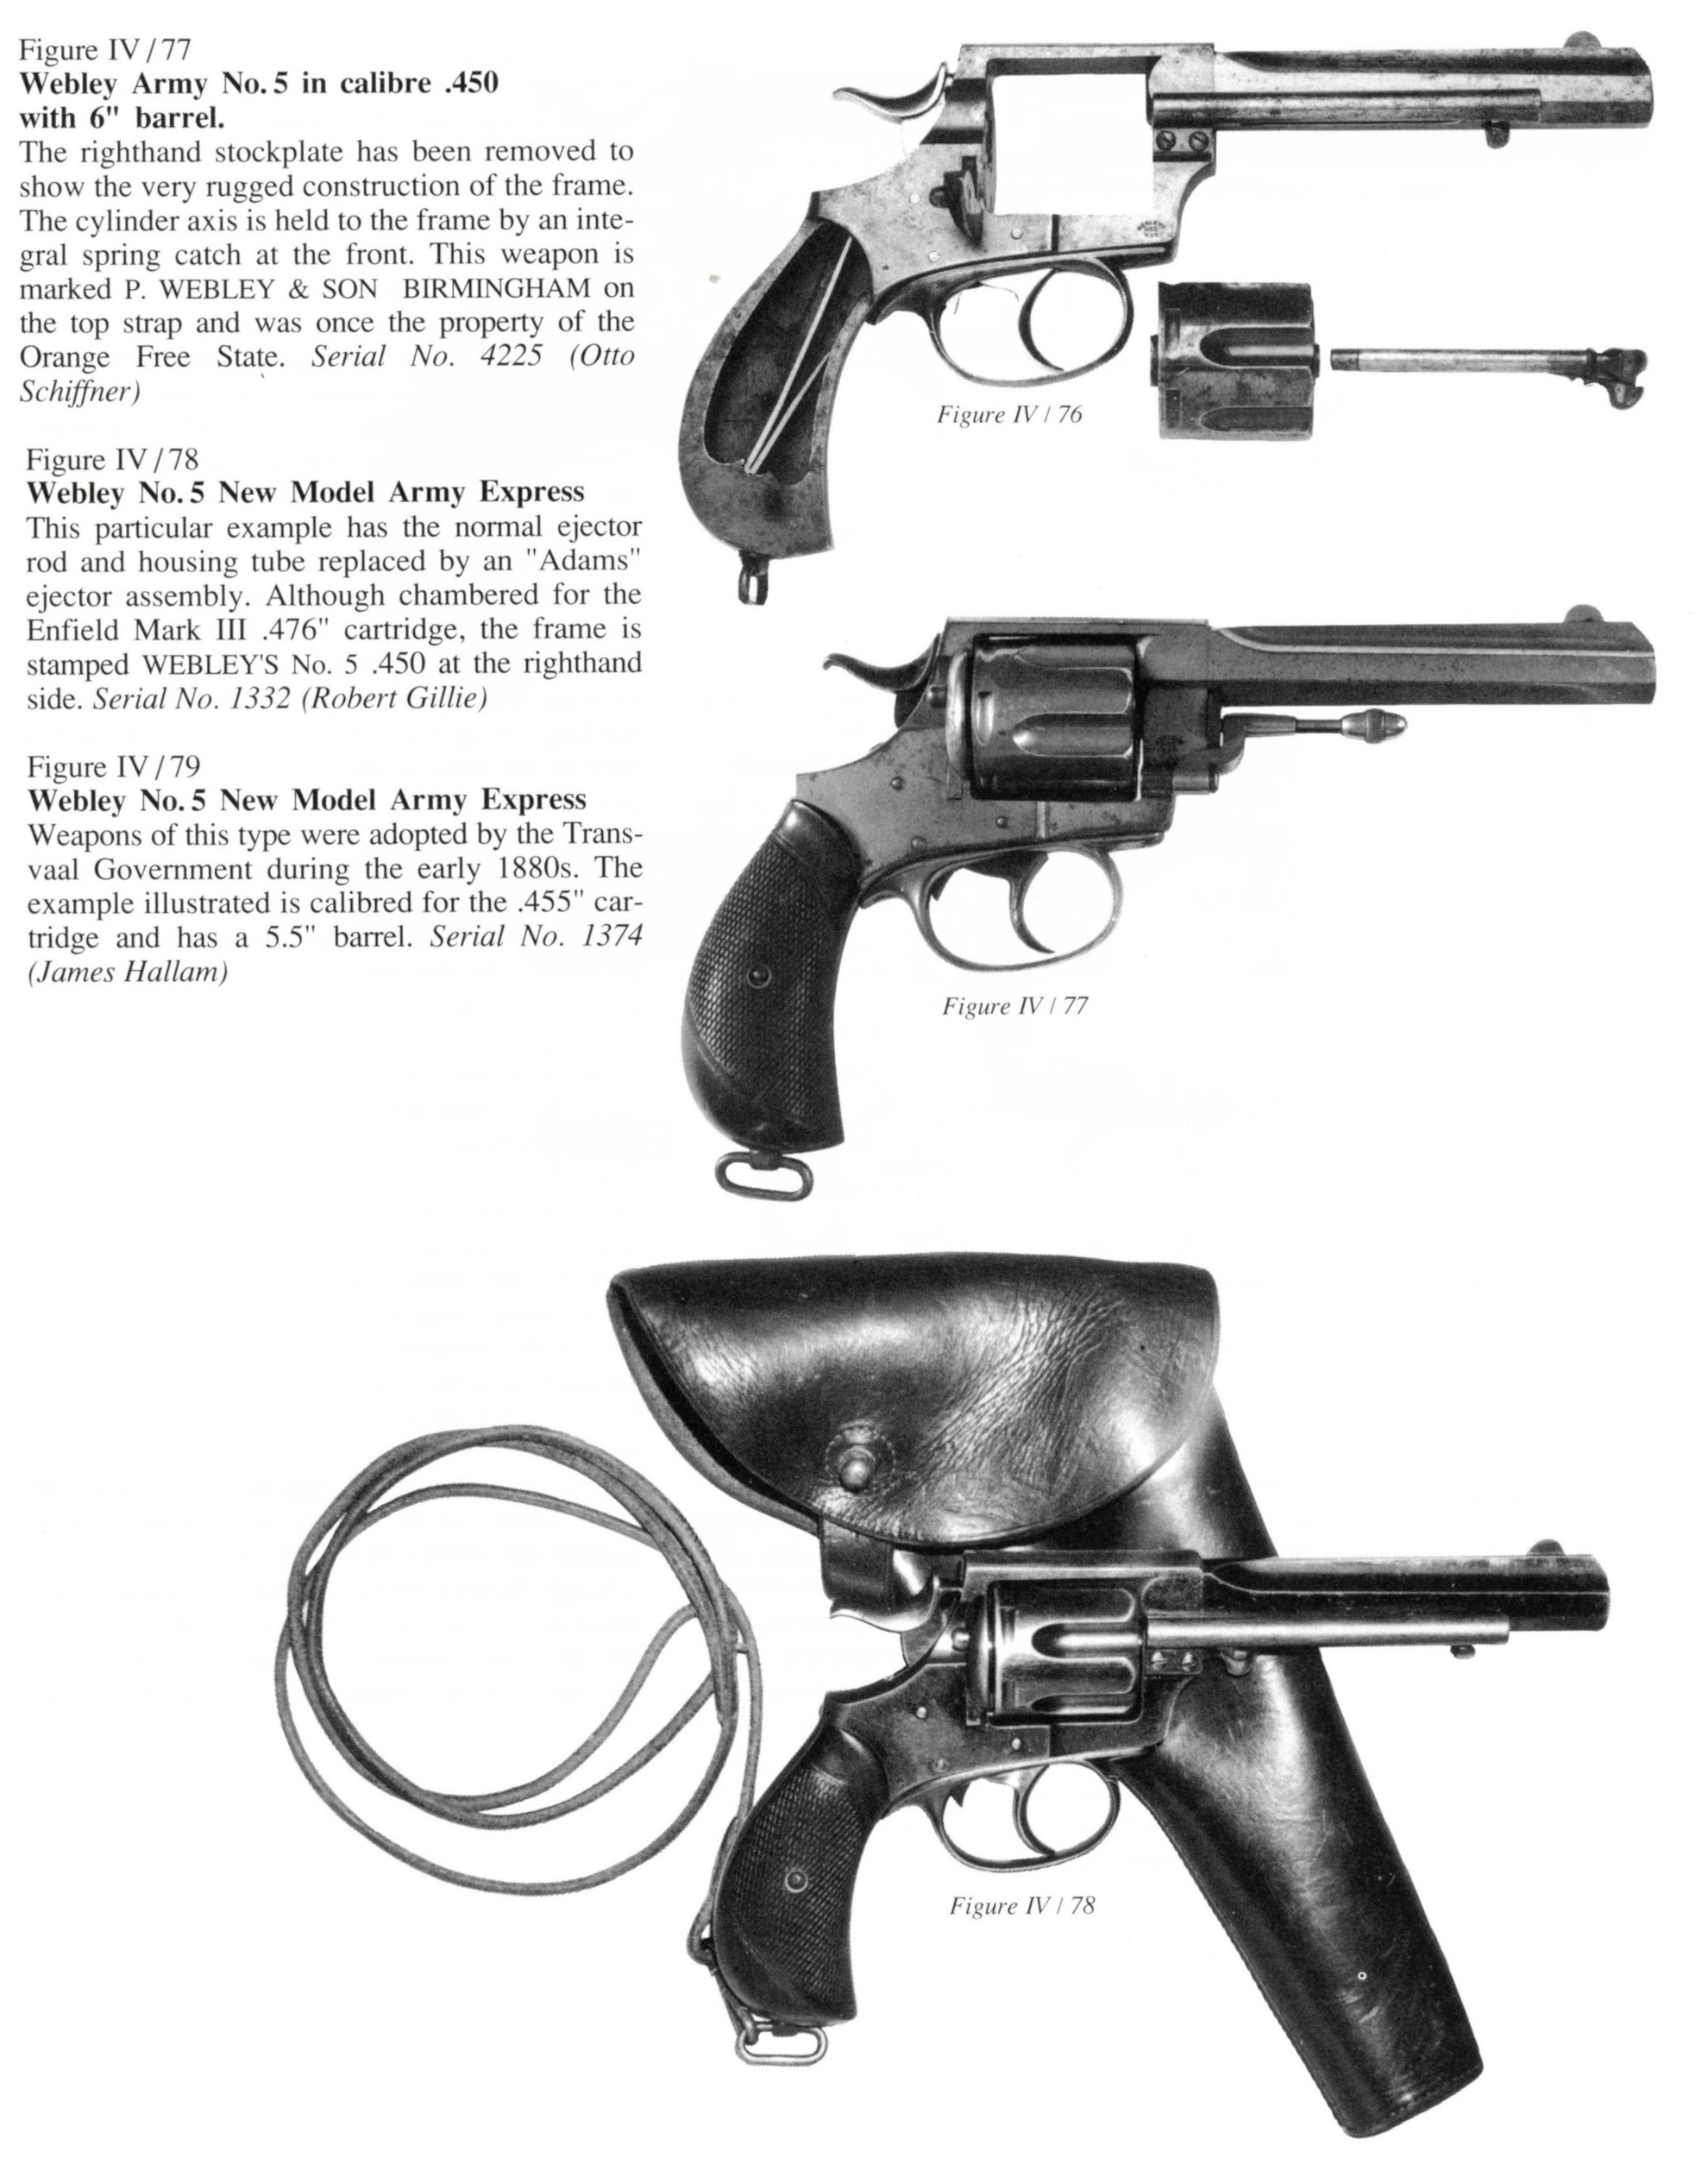 Webley No5 New Model Army Express revolver